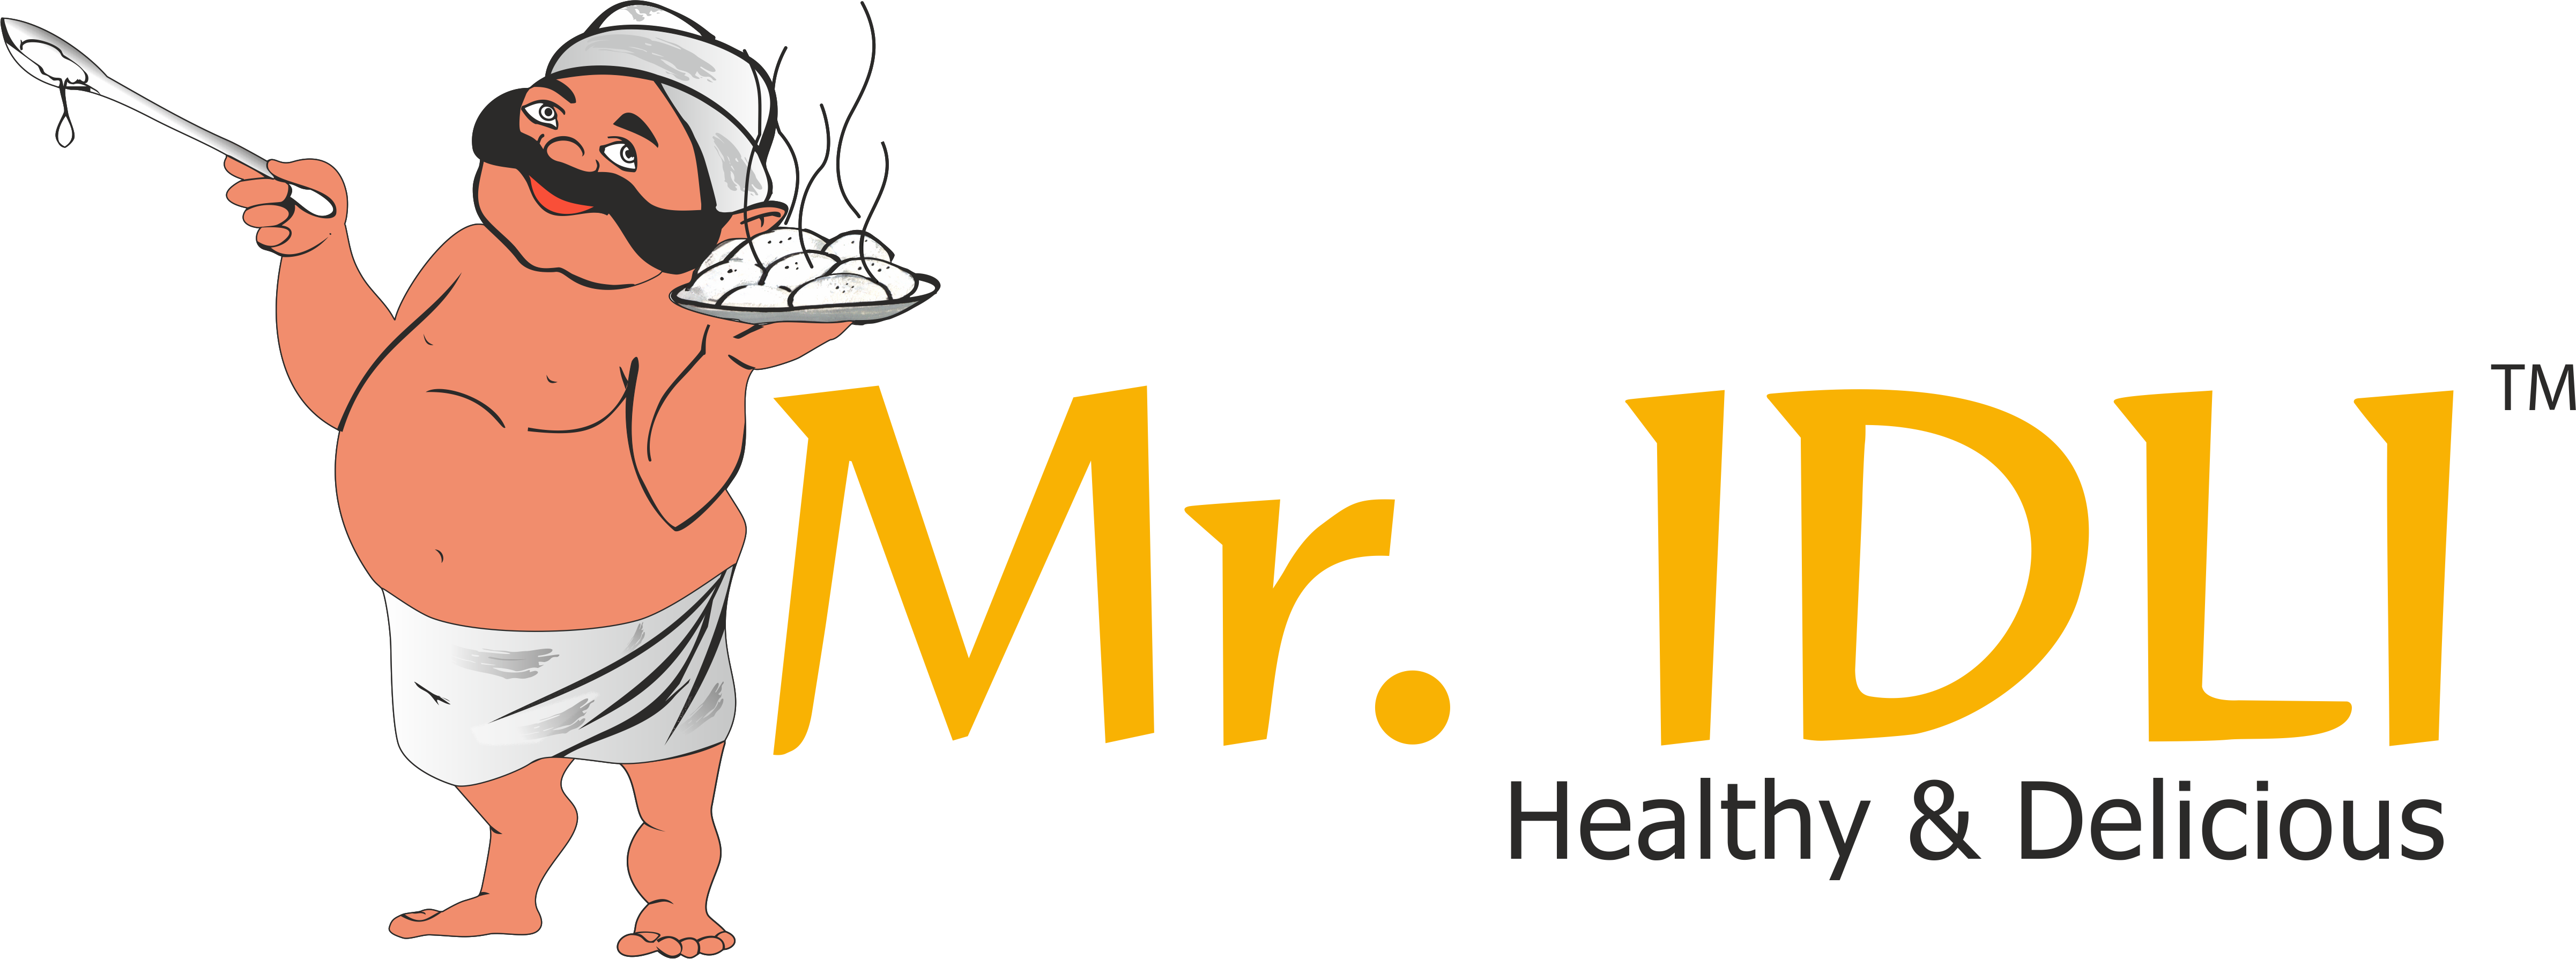 South Indian Food Empire - Mr Idli Logo (4805x1789)